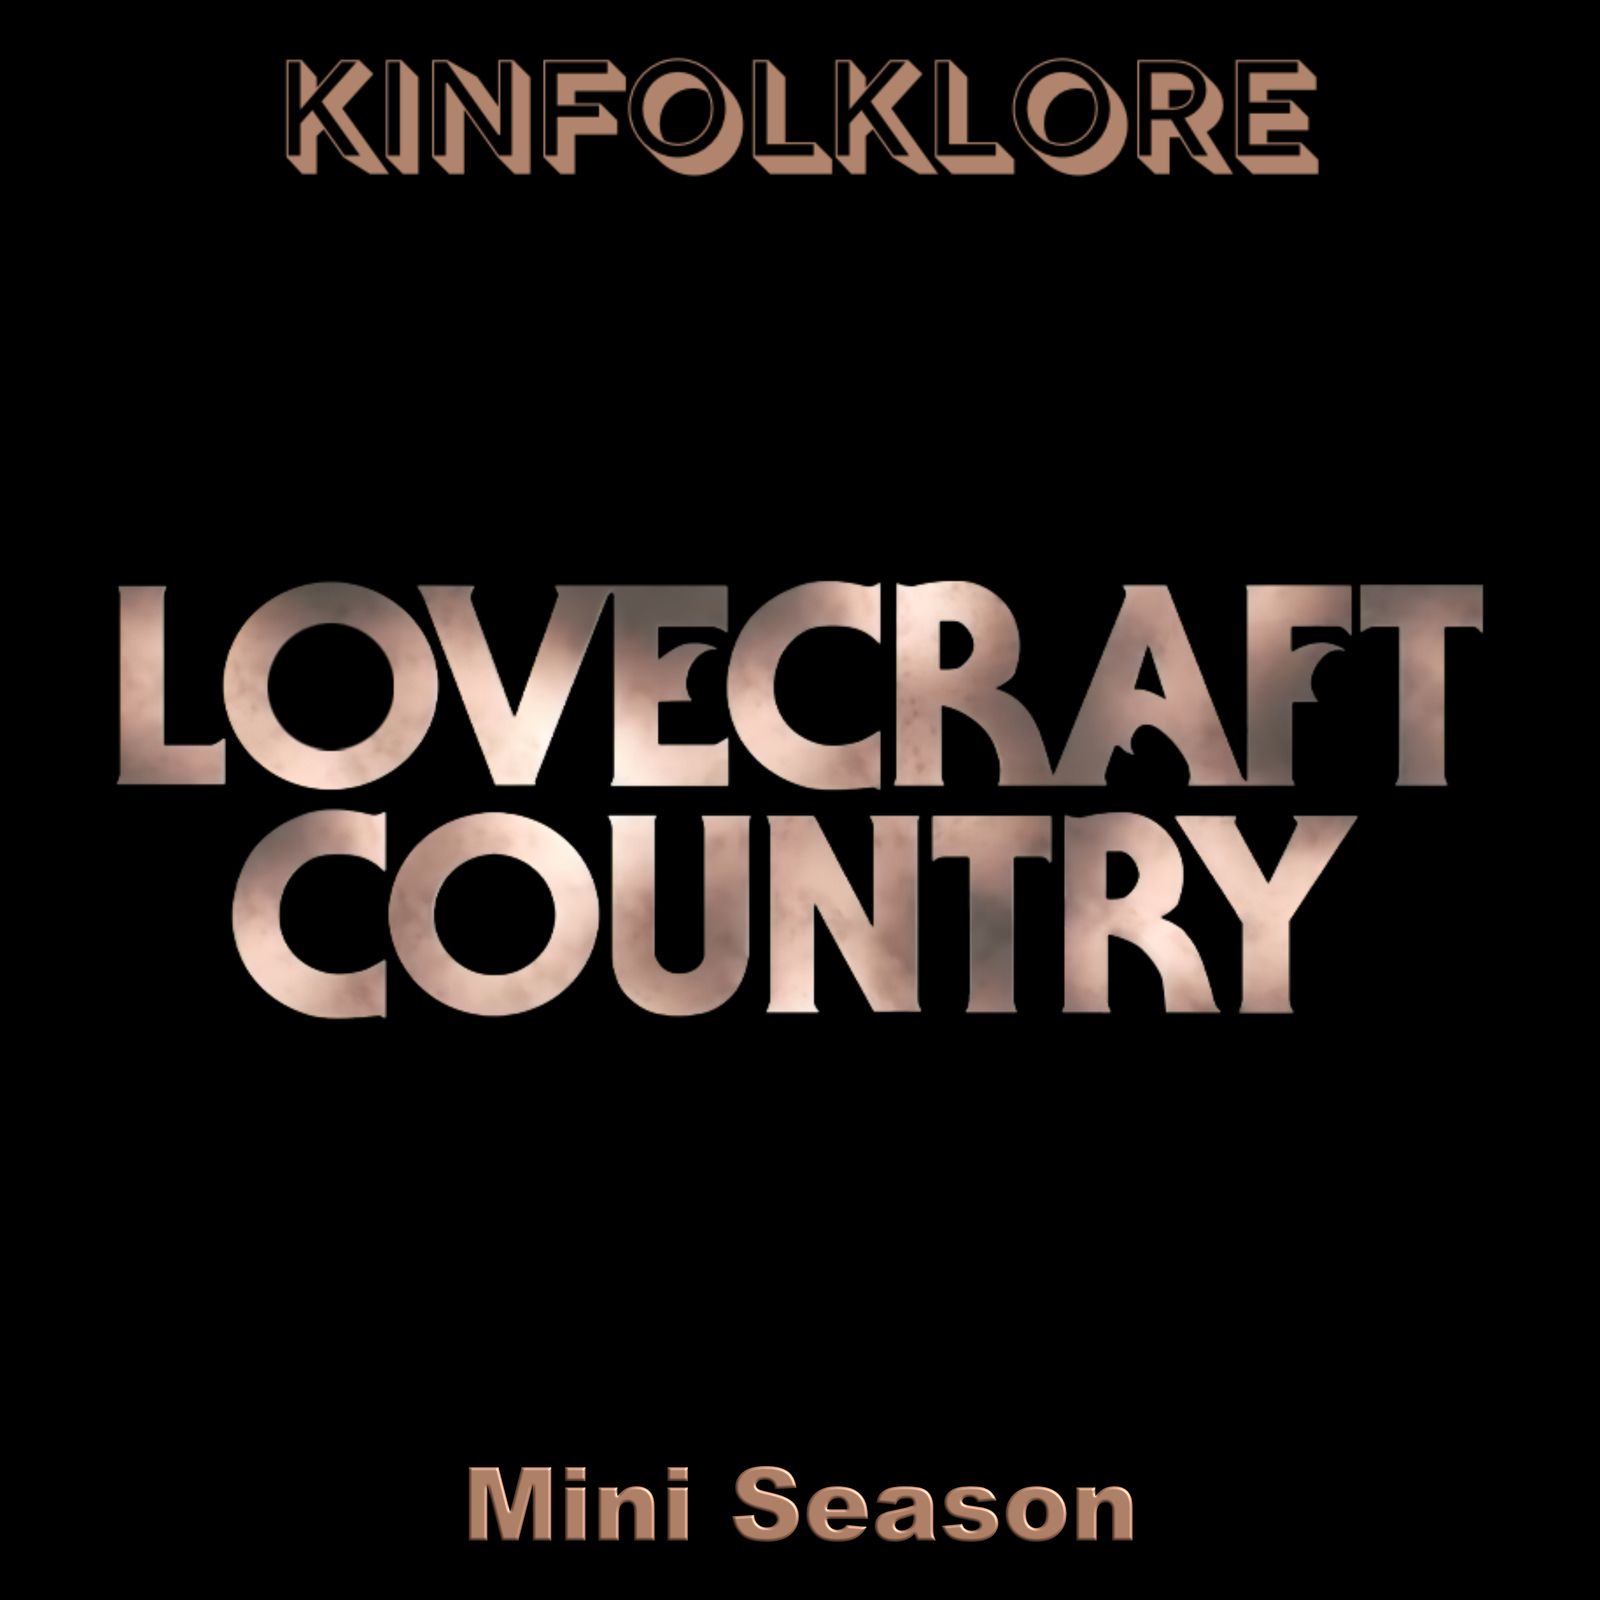 S4 Ep1: Kinfolklore: Lovecraft Country Mini Season (Episodes 1-5)